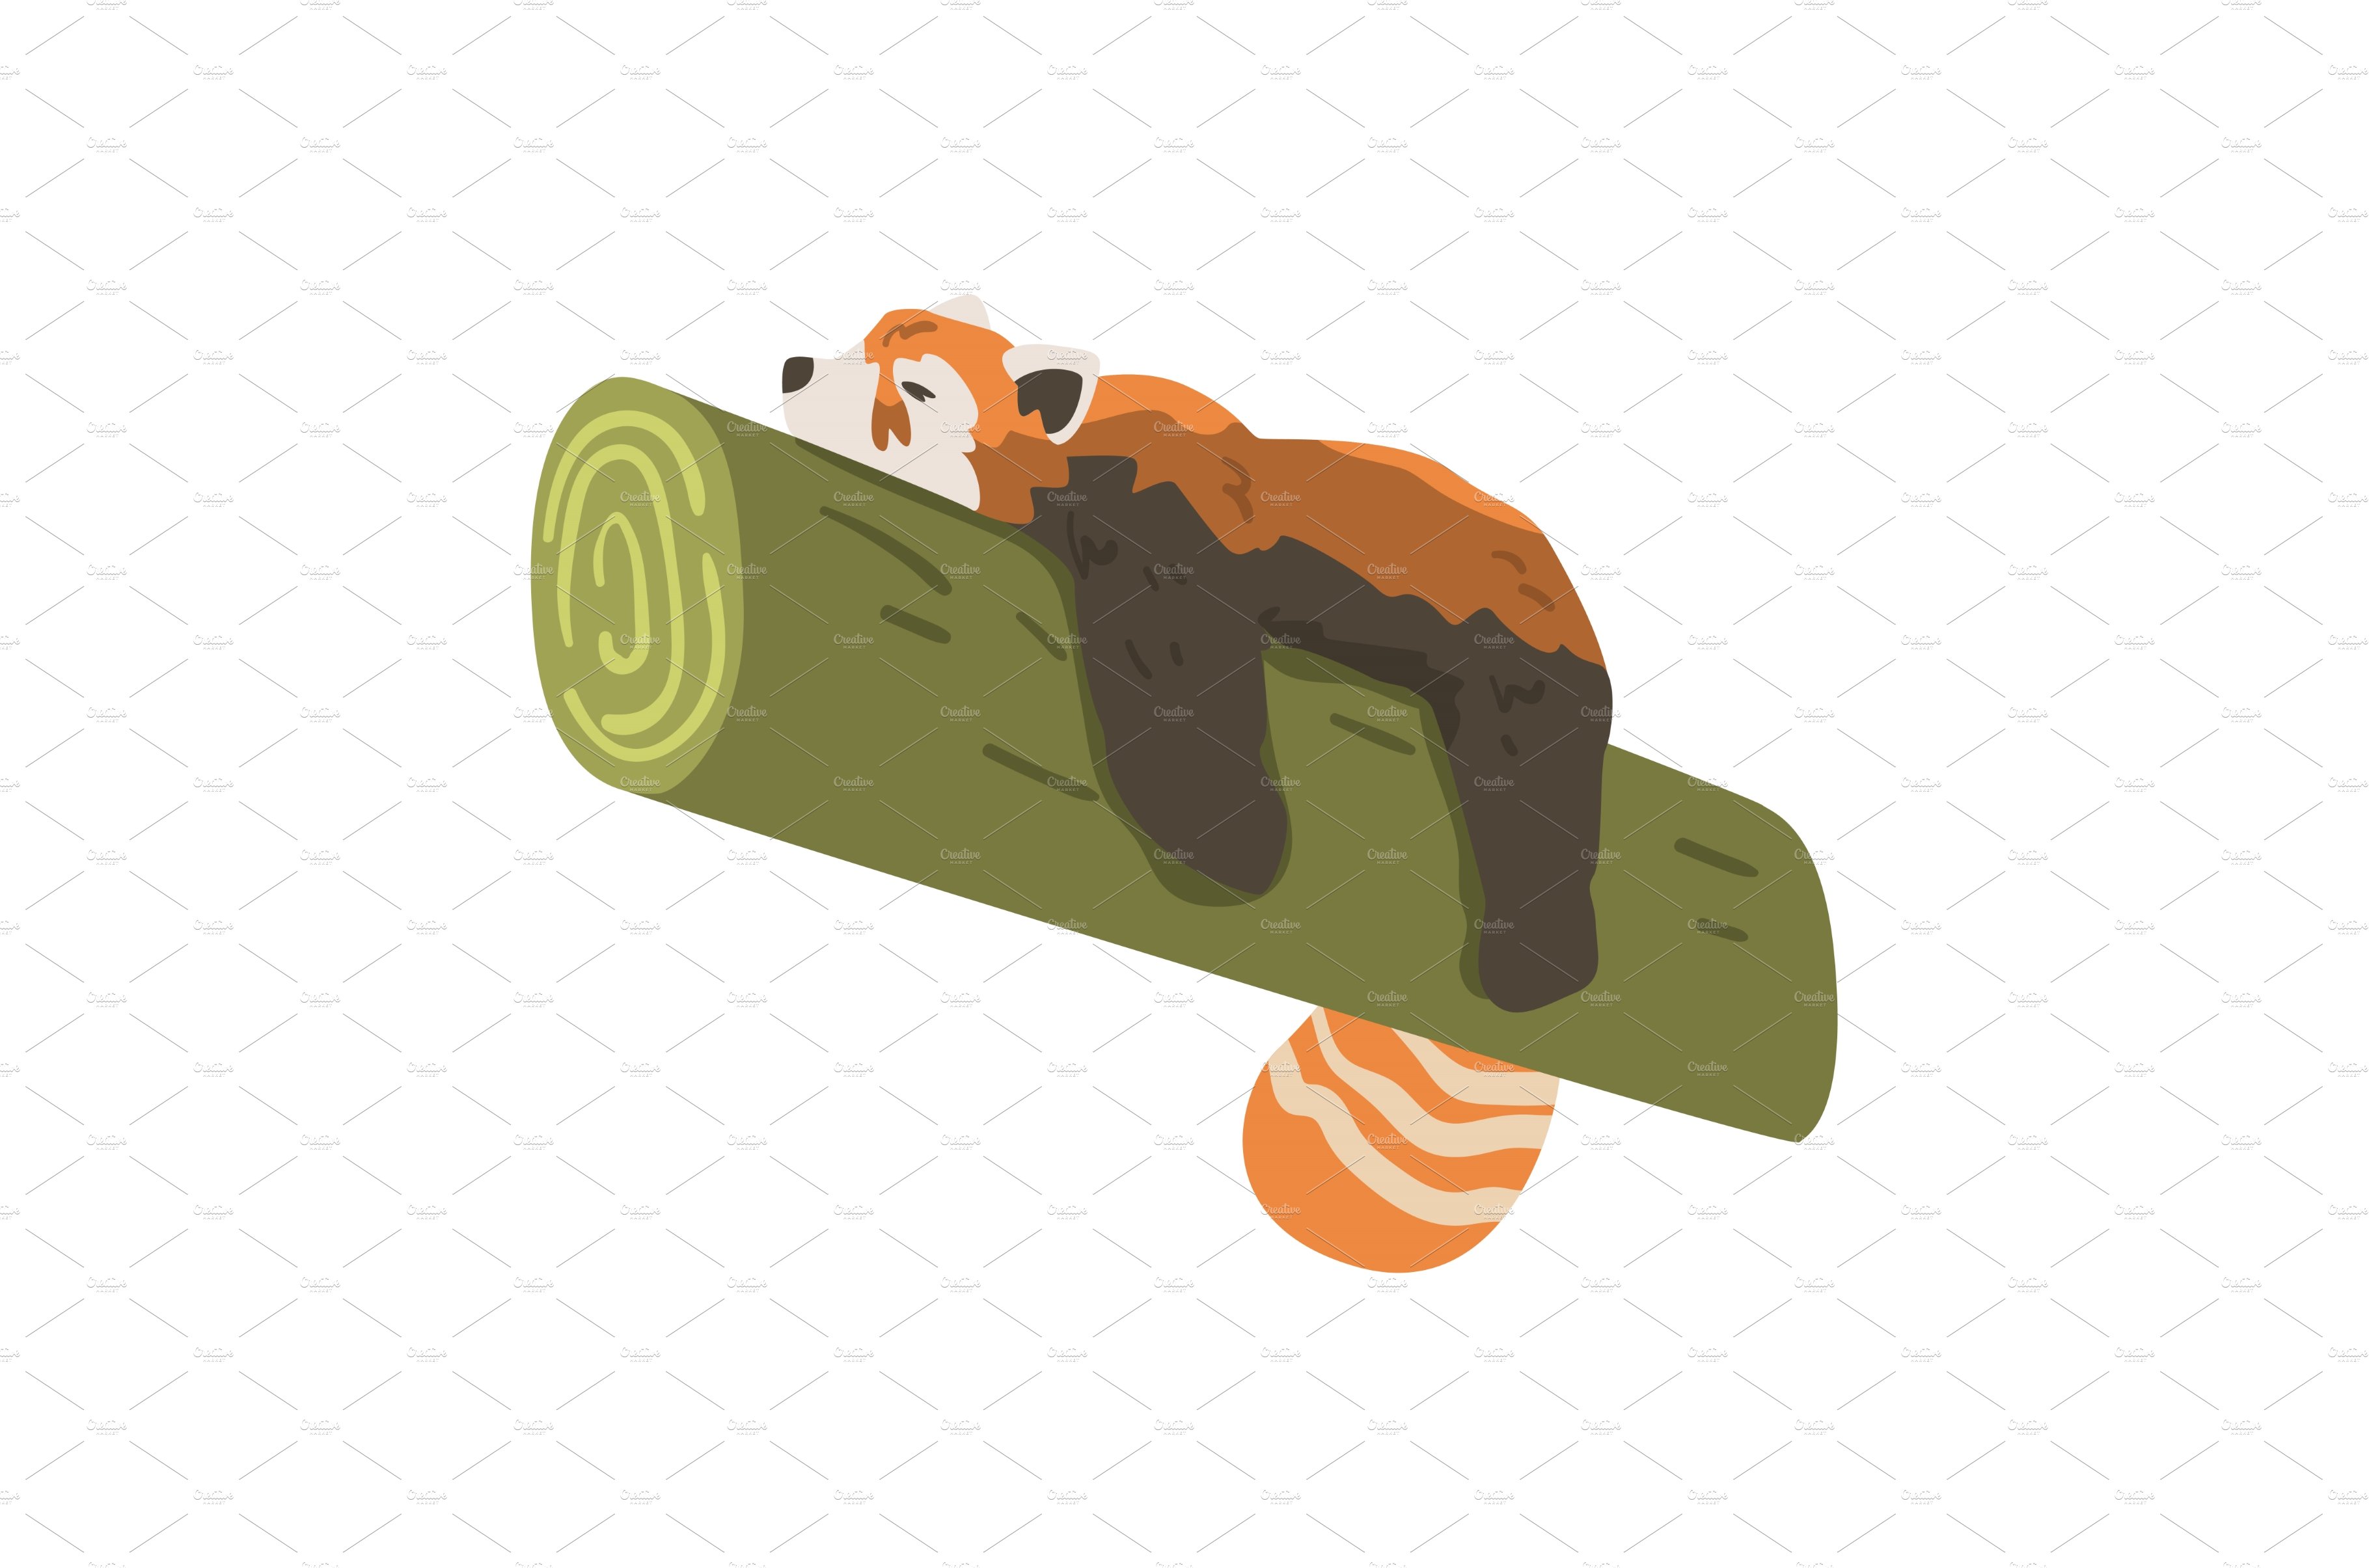 Cute Red Panda Sleeping on Bamboo cover image.